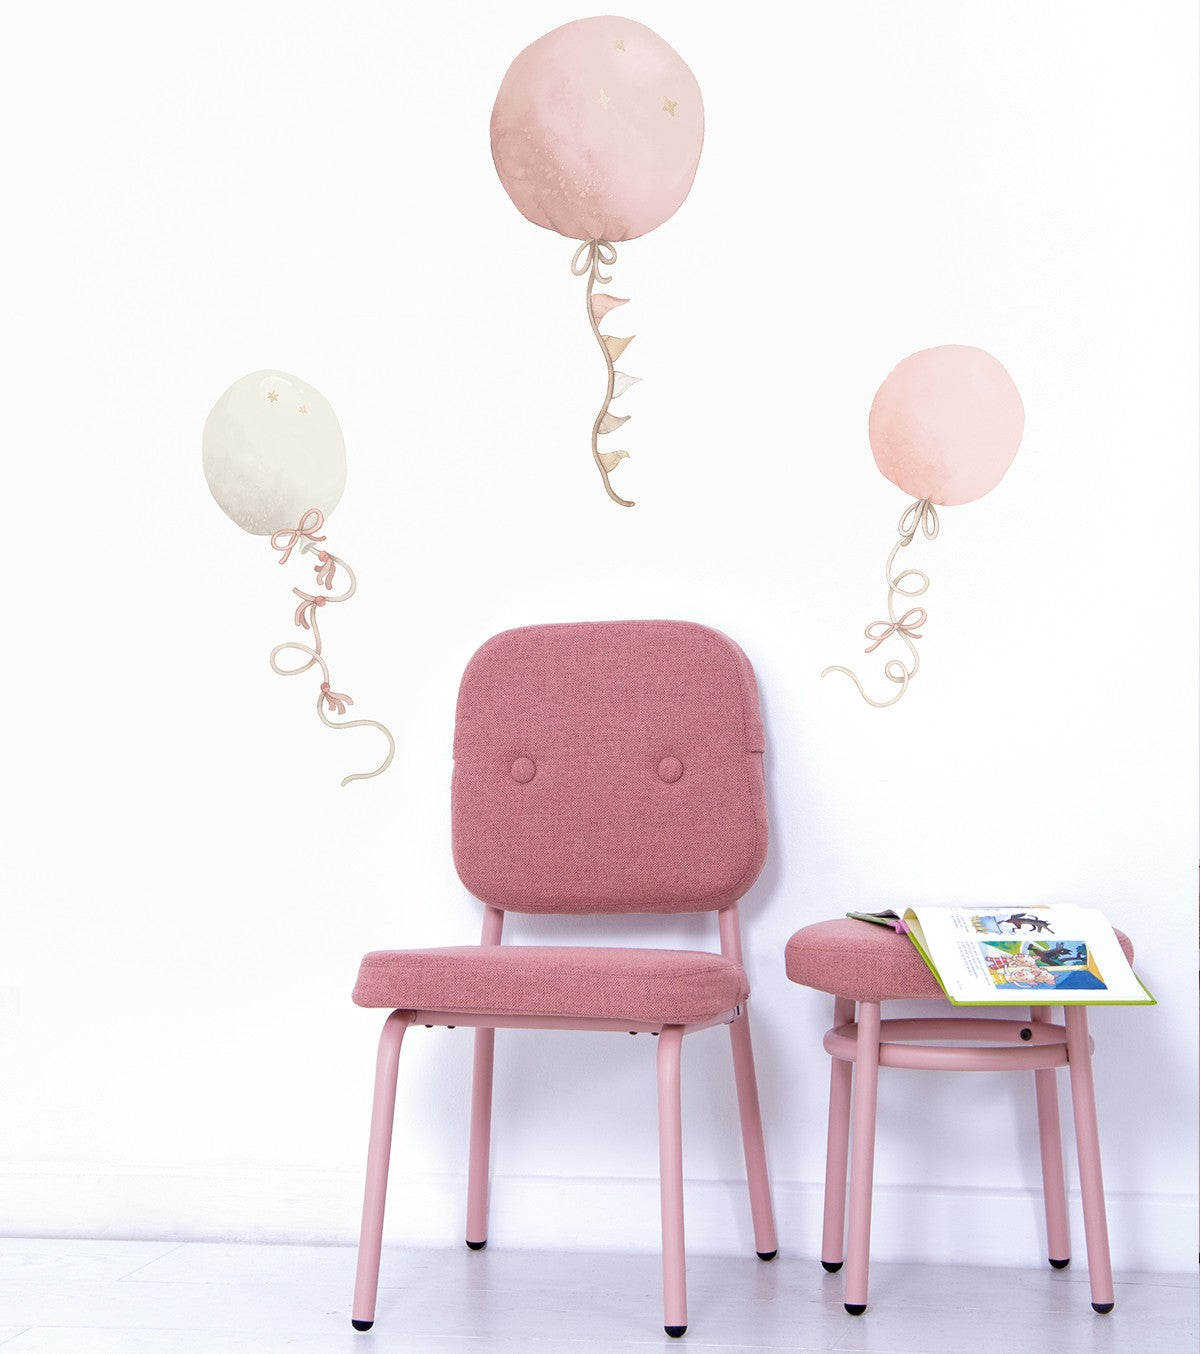 SELENE - Large sticker - Balloons (pink)